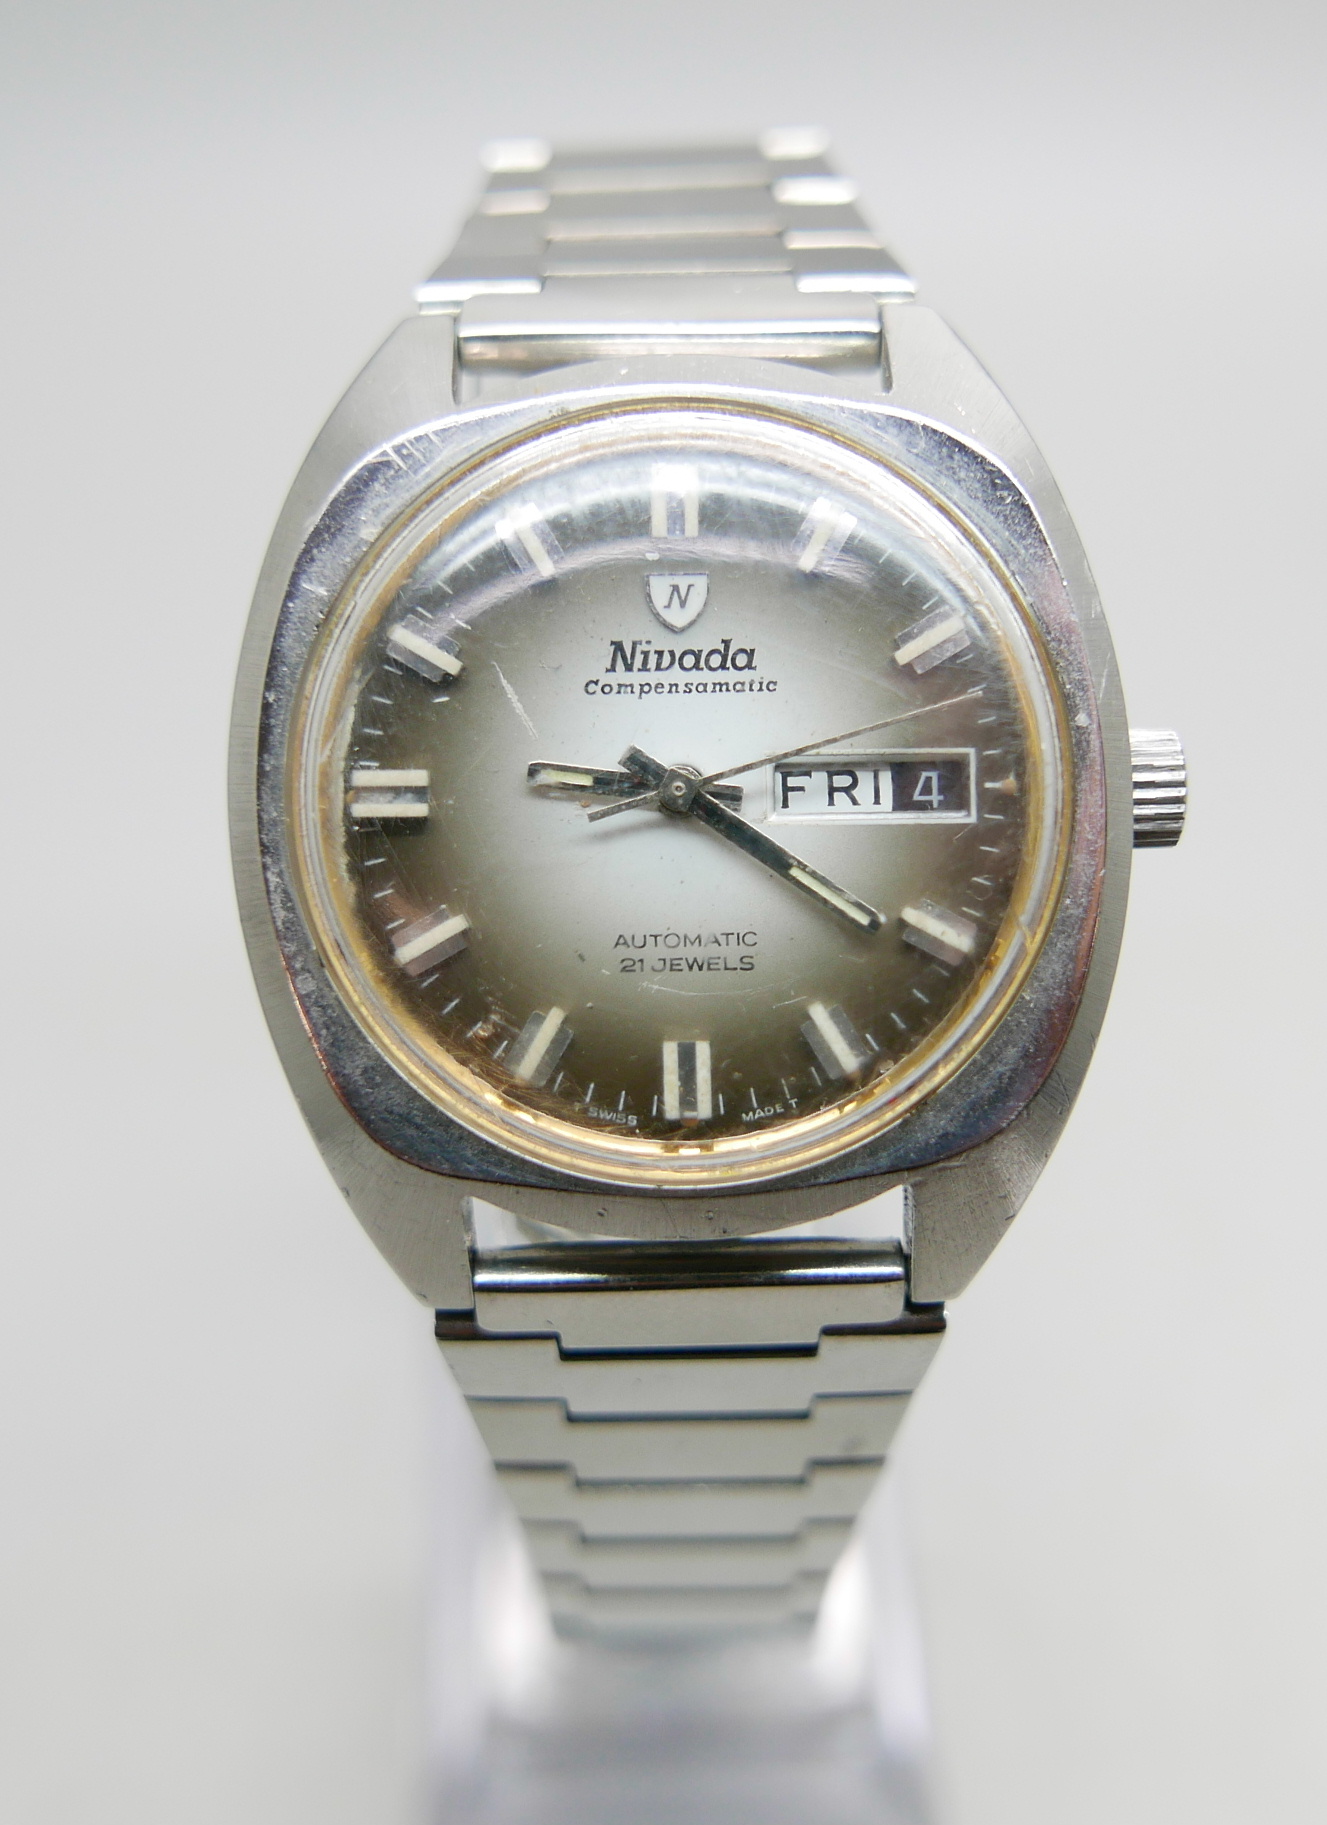 A gentleman's Nivada Compensamatic automatic wristwatch